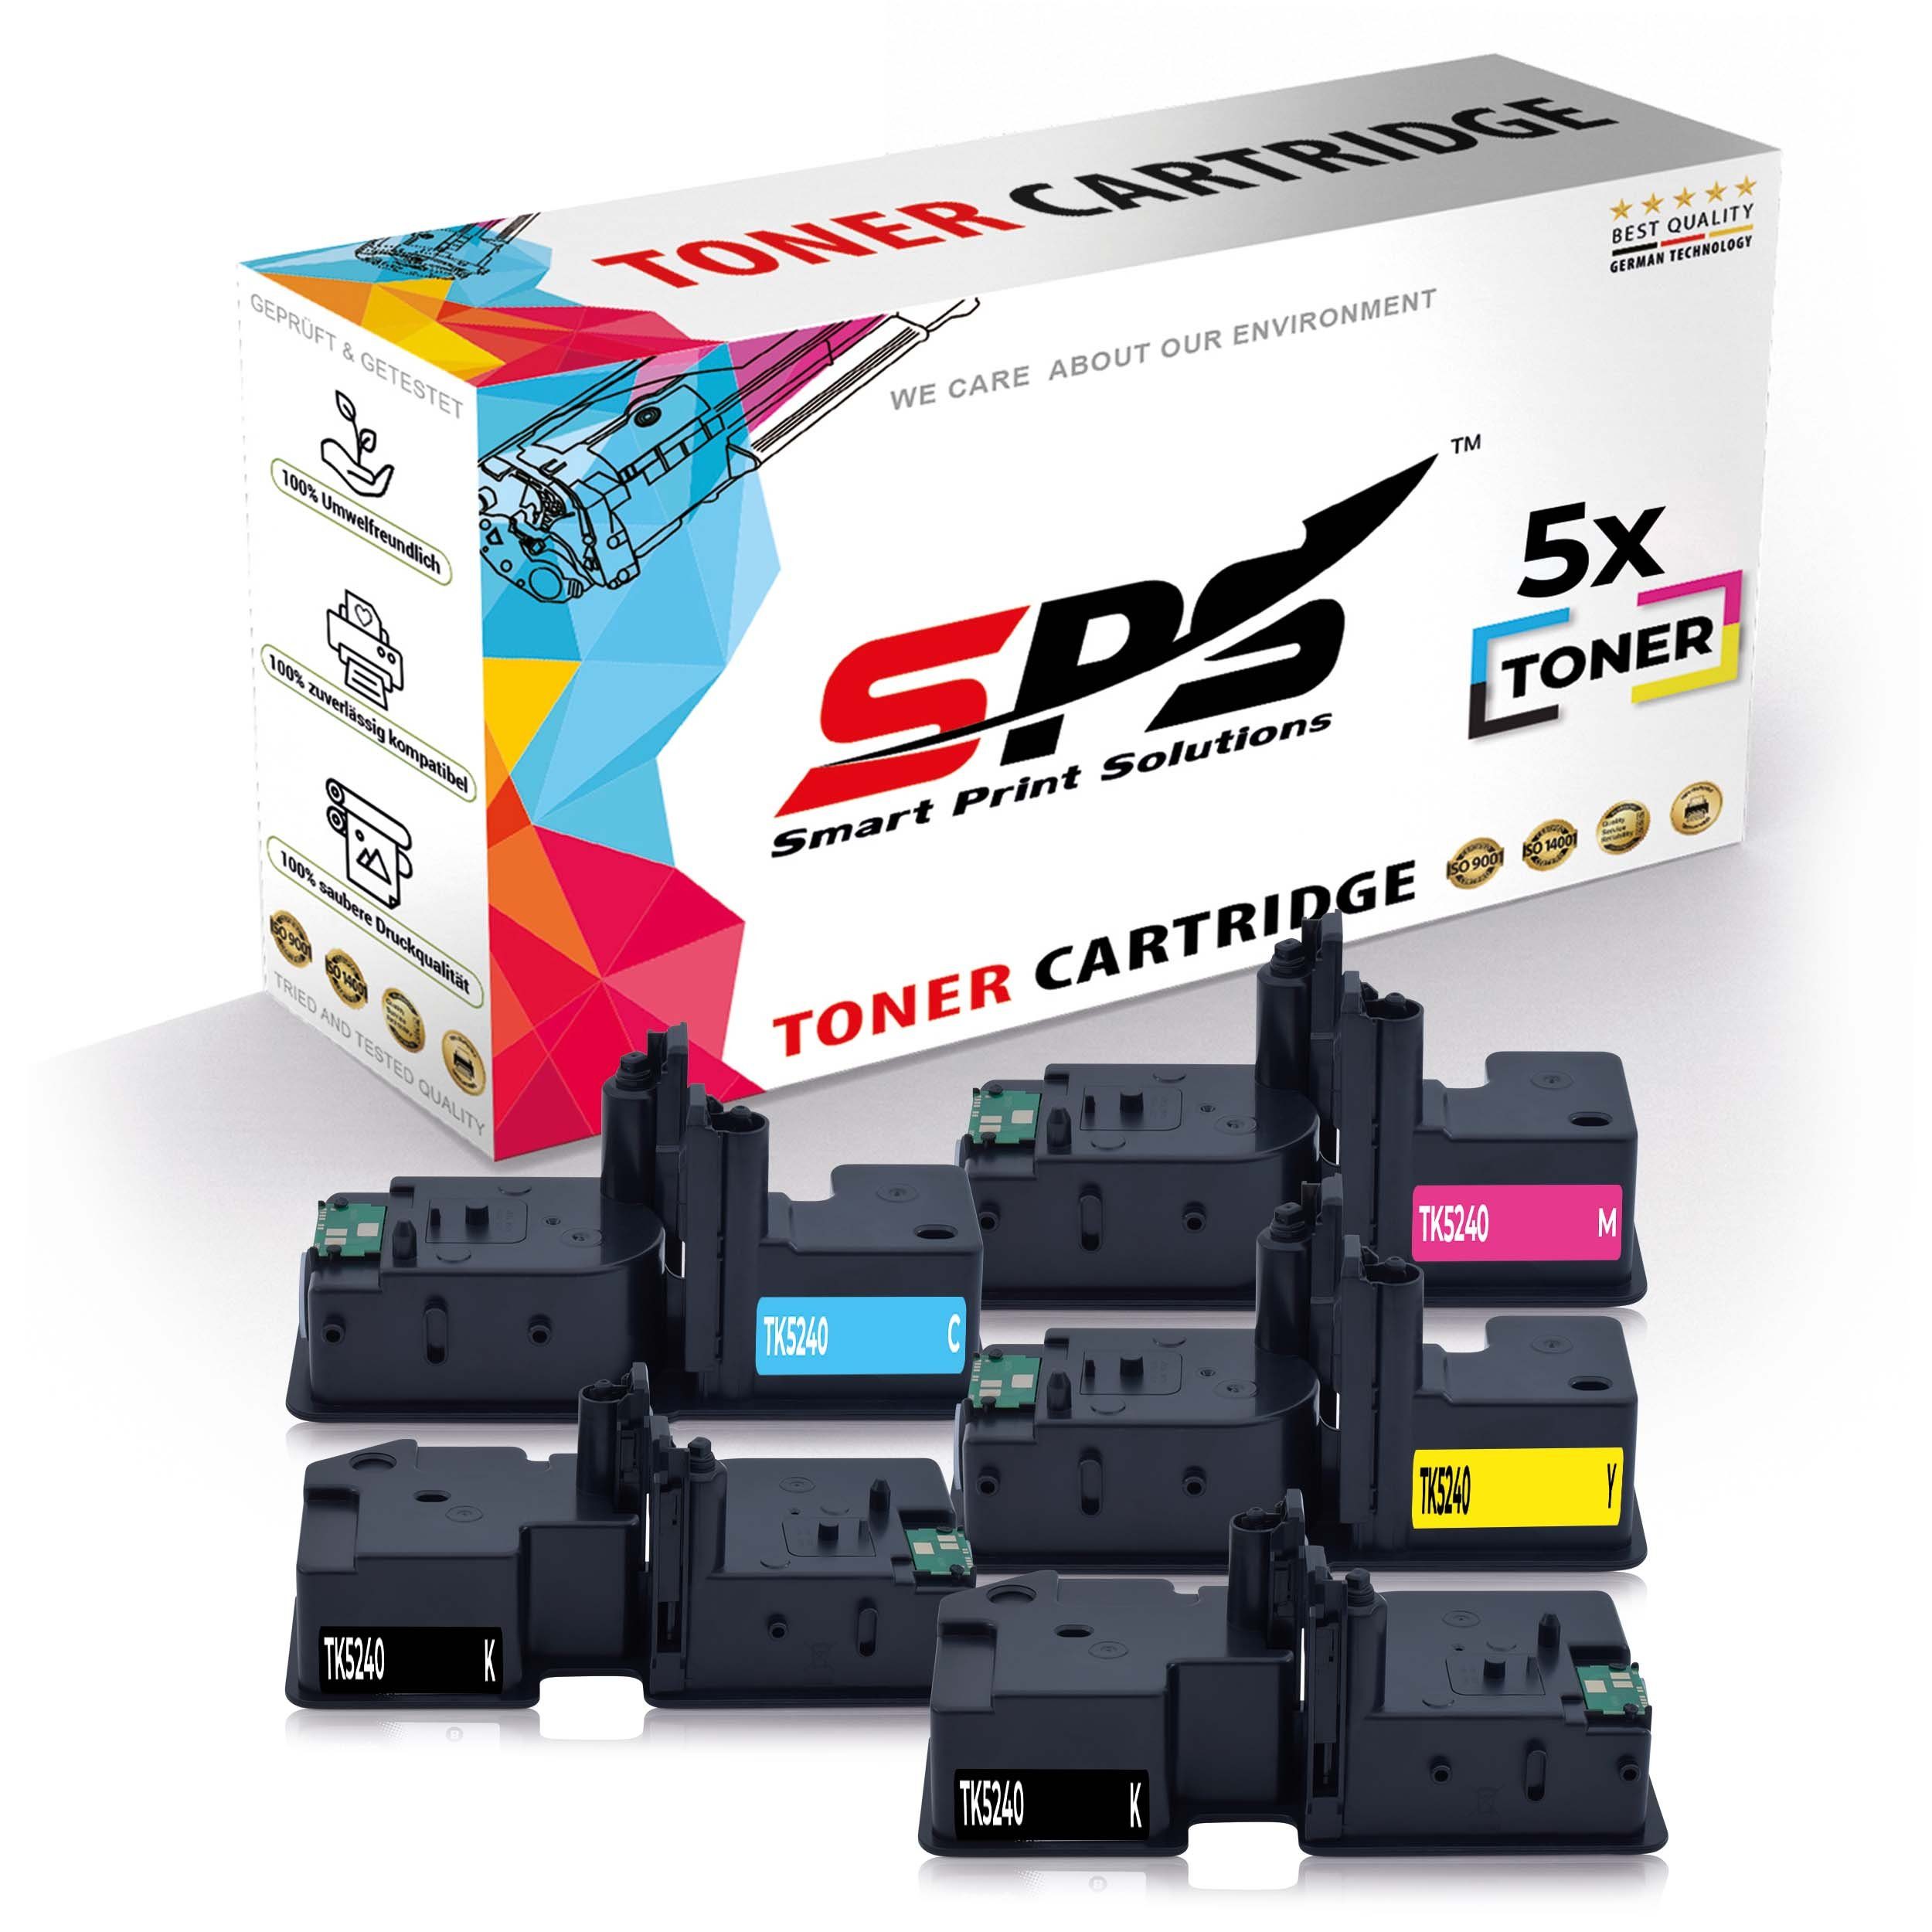 SPS Tonerkartusche 5x Multipack Set Kompatibel für Kyocera Ecosys M, (5er Pack, 5x Toner)